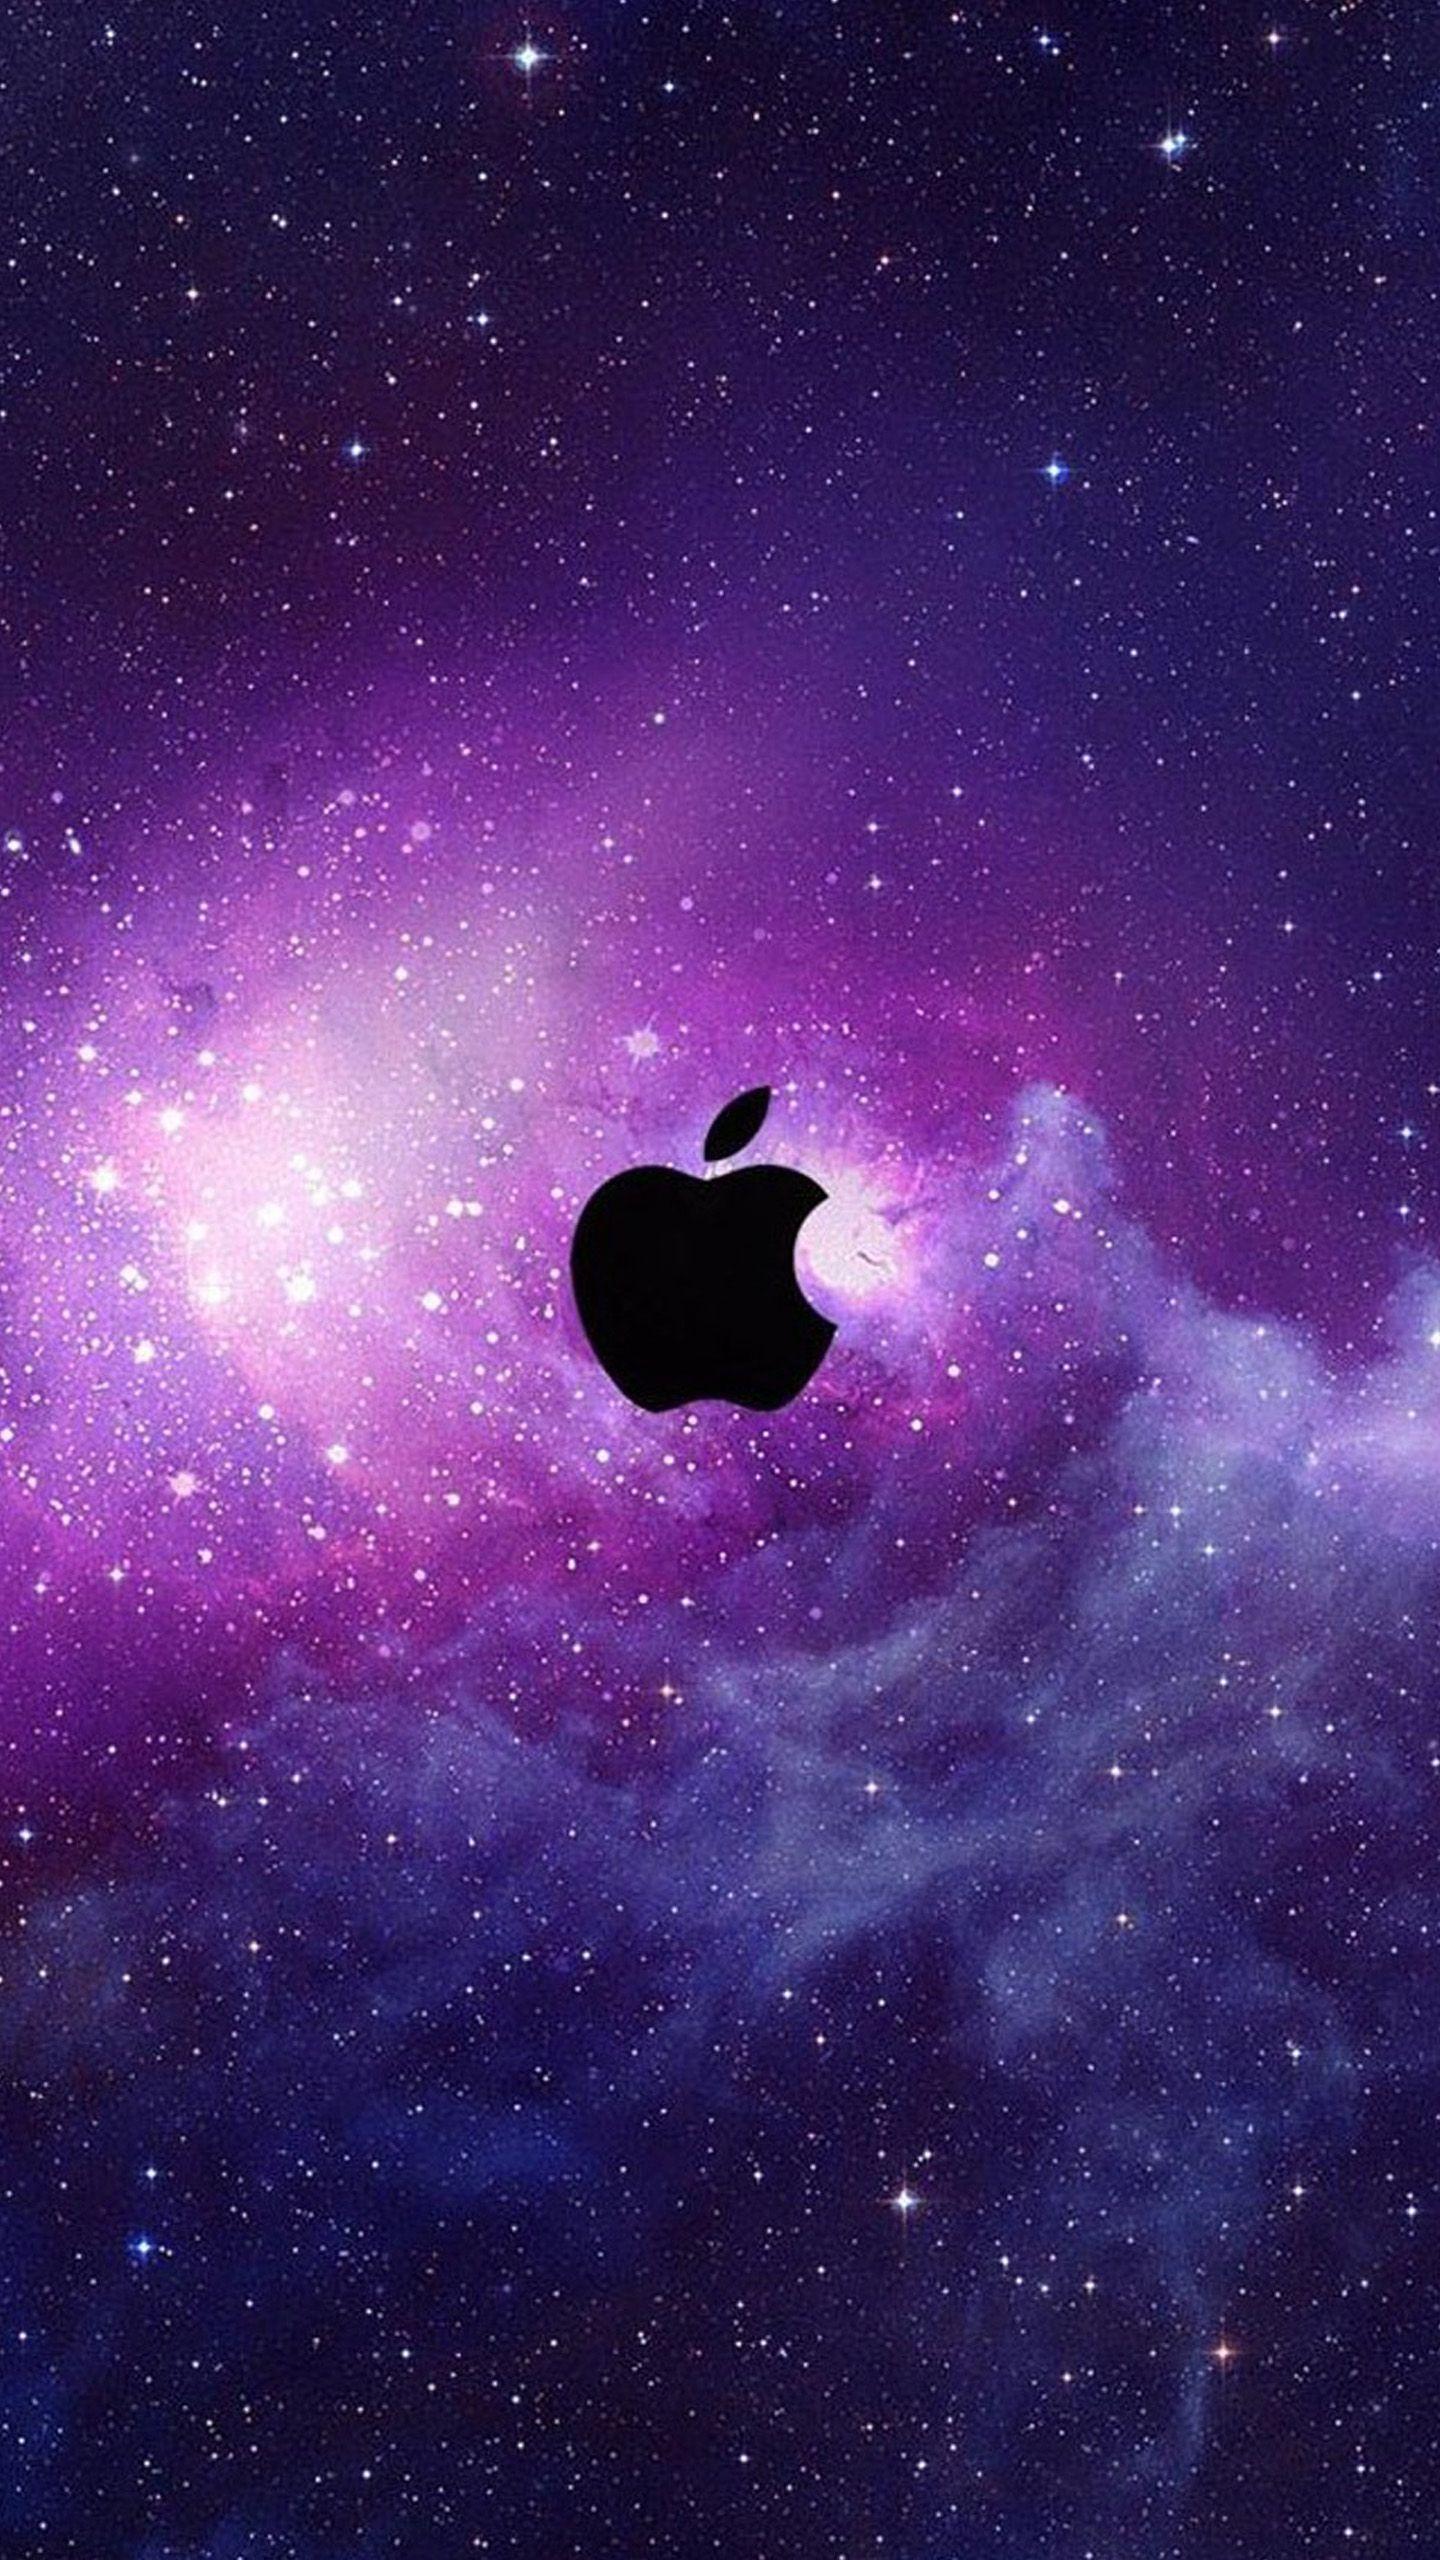 Apple Galaxy Logo - Space Apple LOGO 02 Galaxy S6 Wallpaper | Galaxy S6 Wallpapers